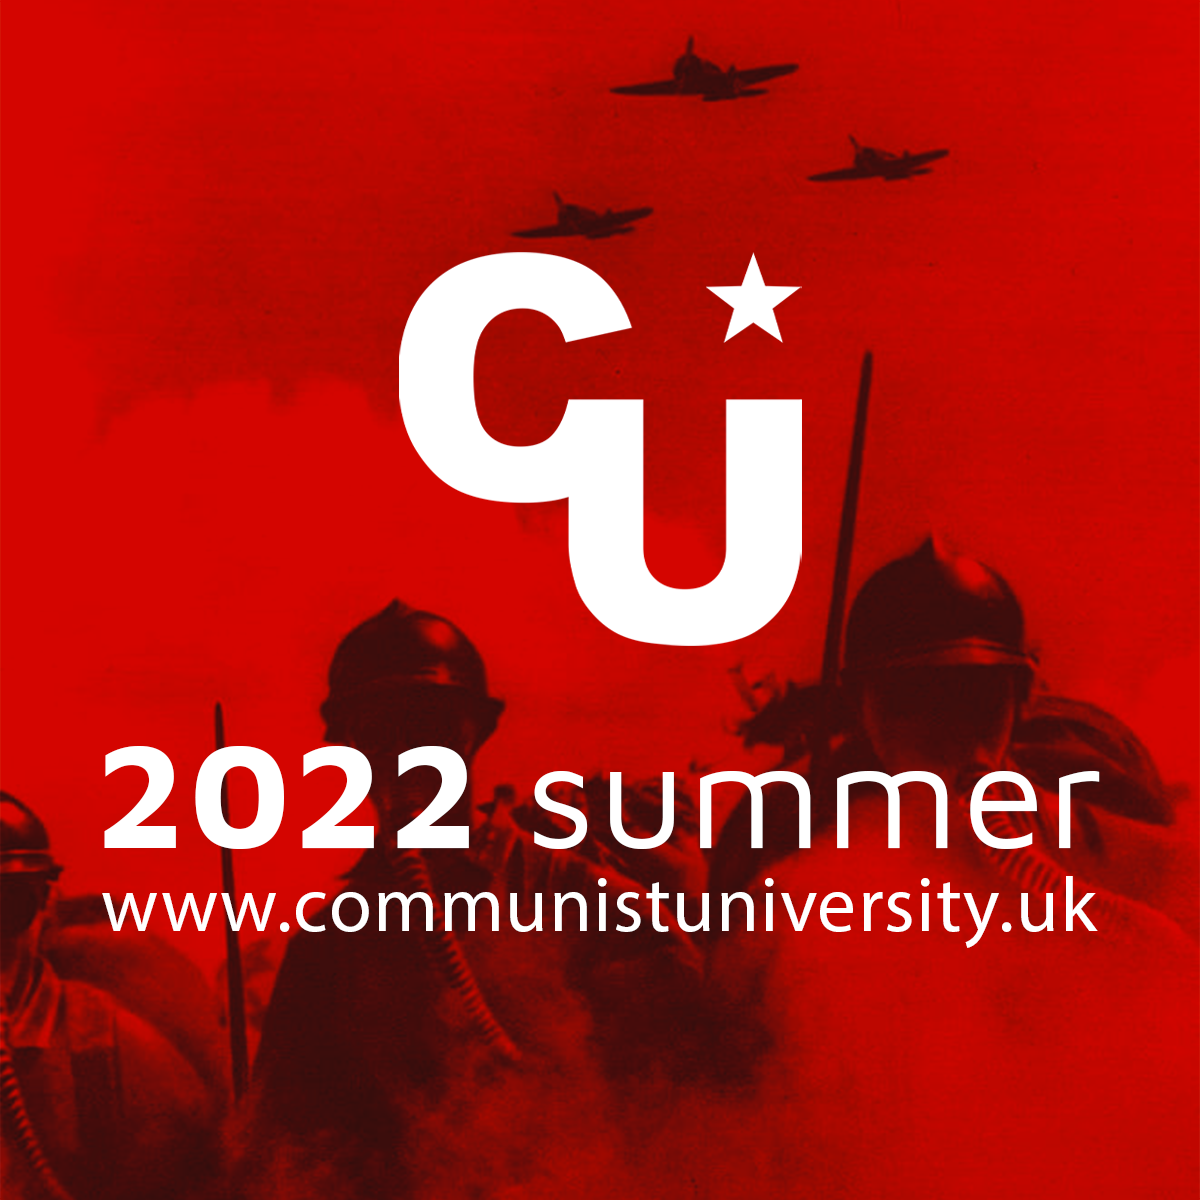 Communist University 2022 Summer